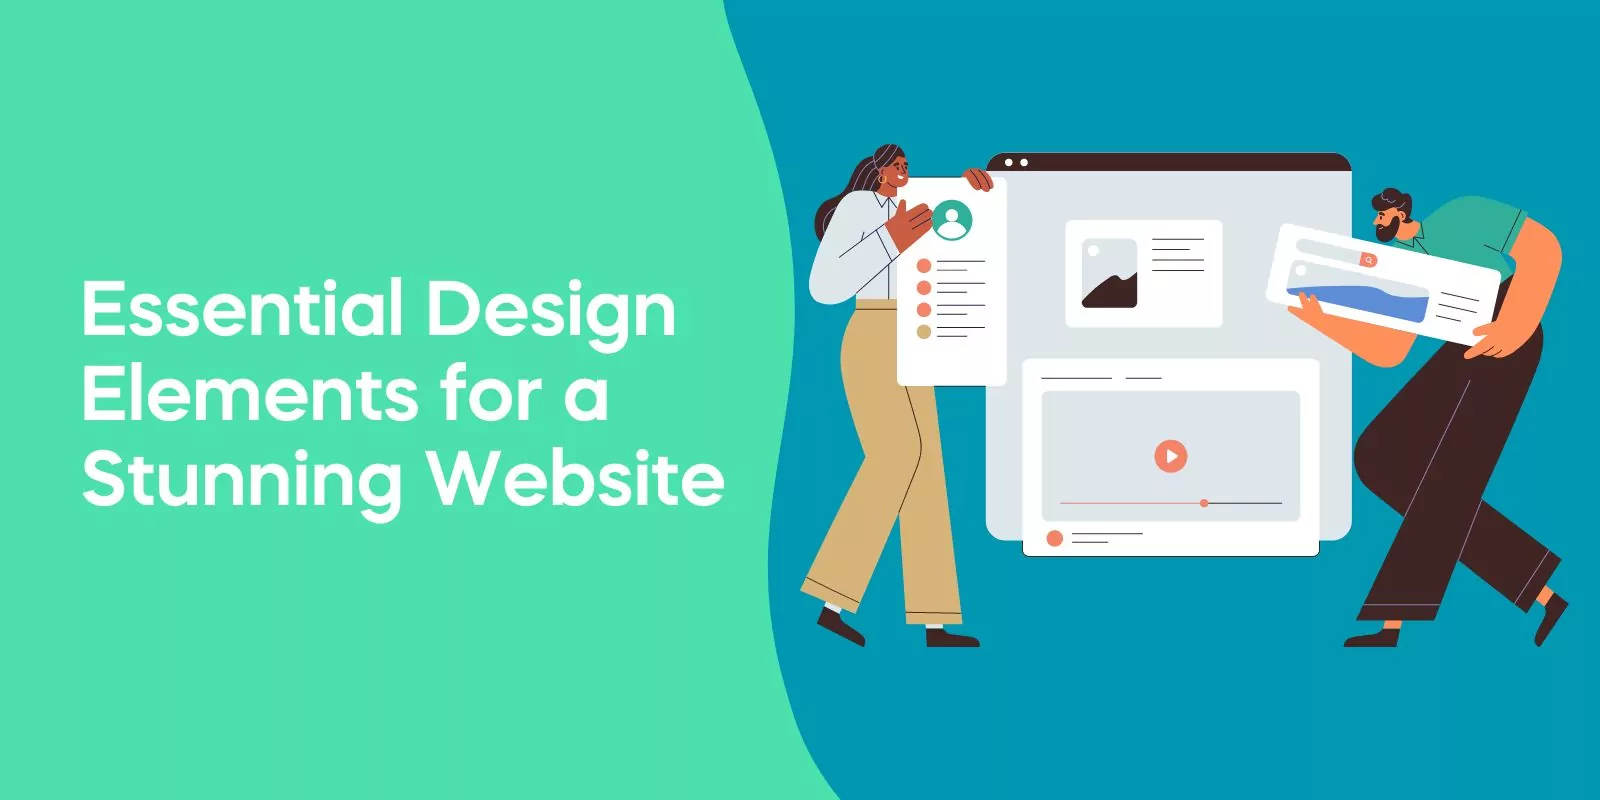 Essential Design Elements for a Stunning Website